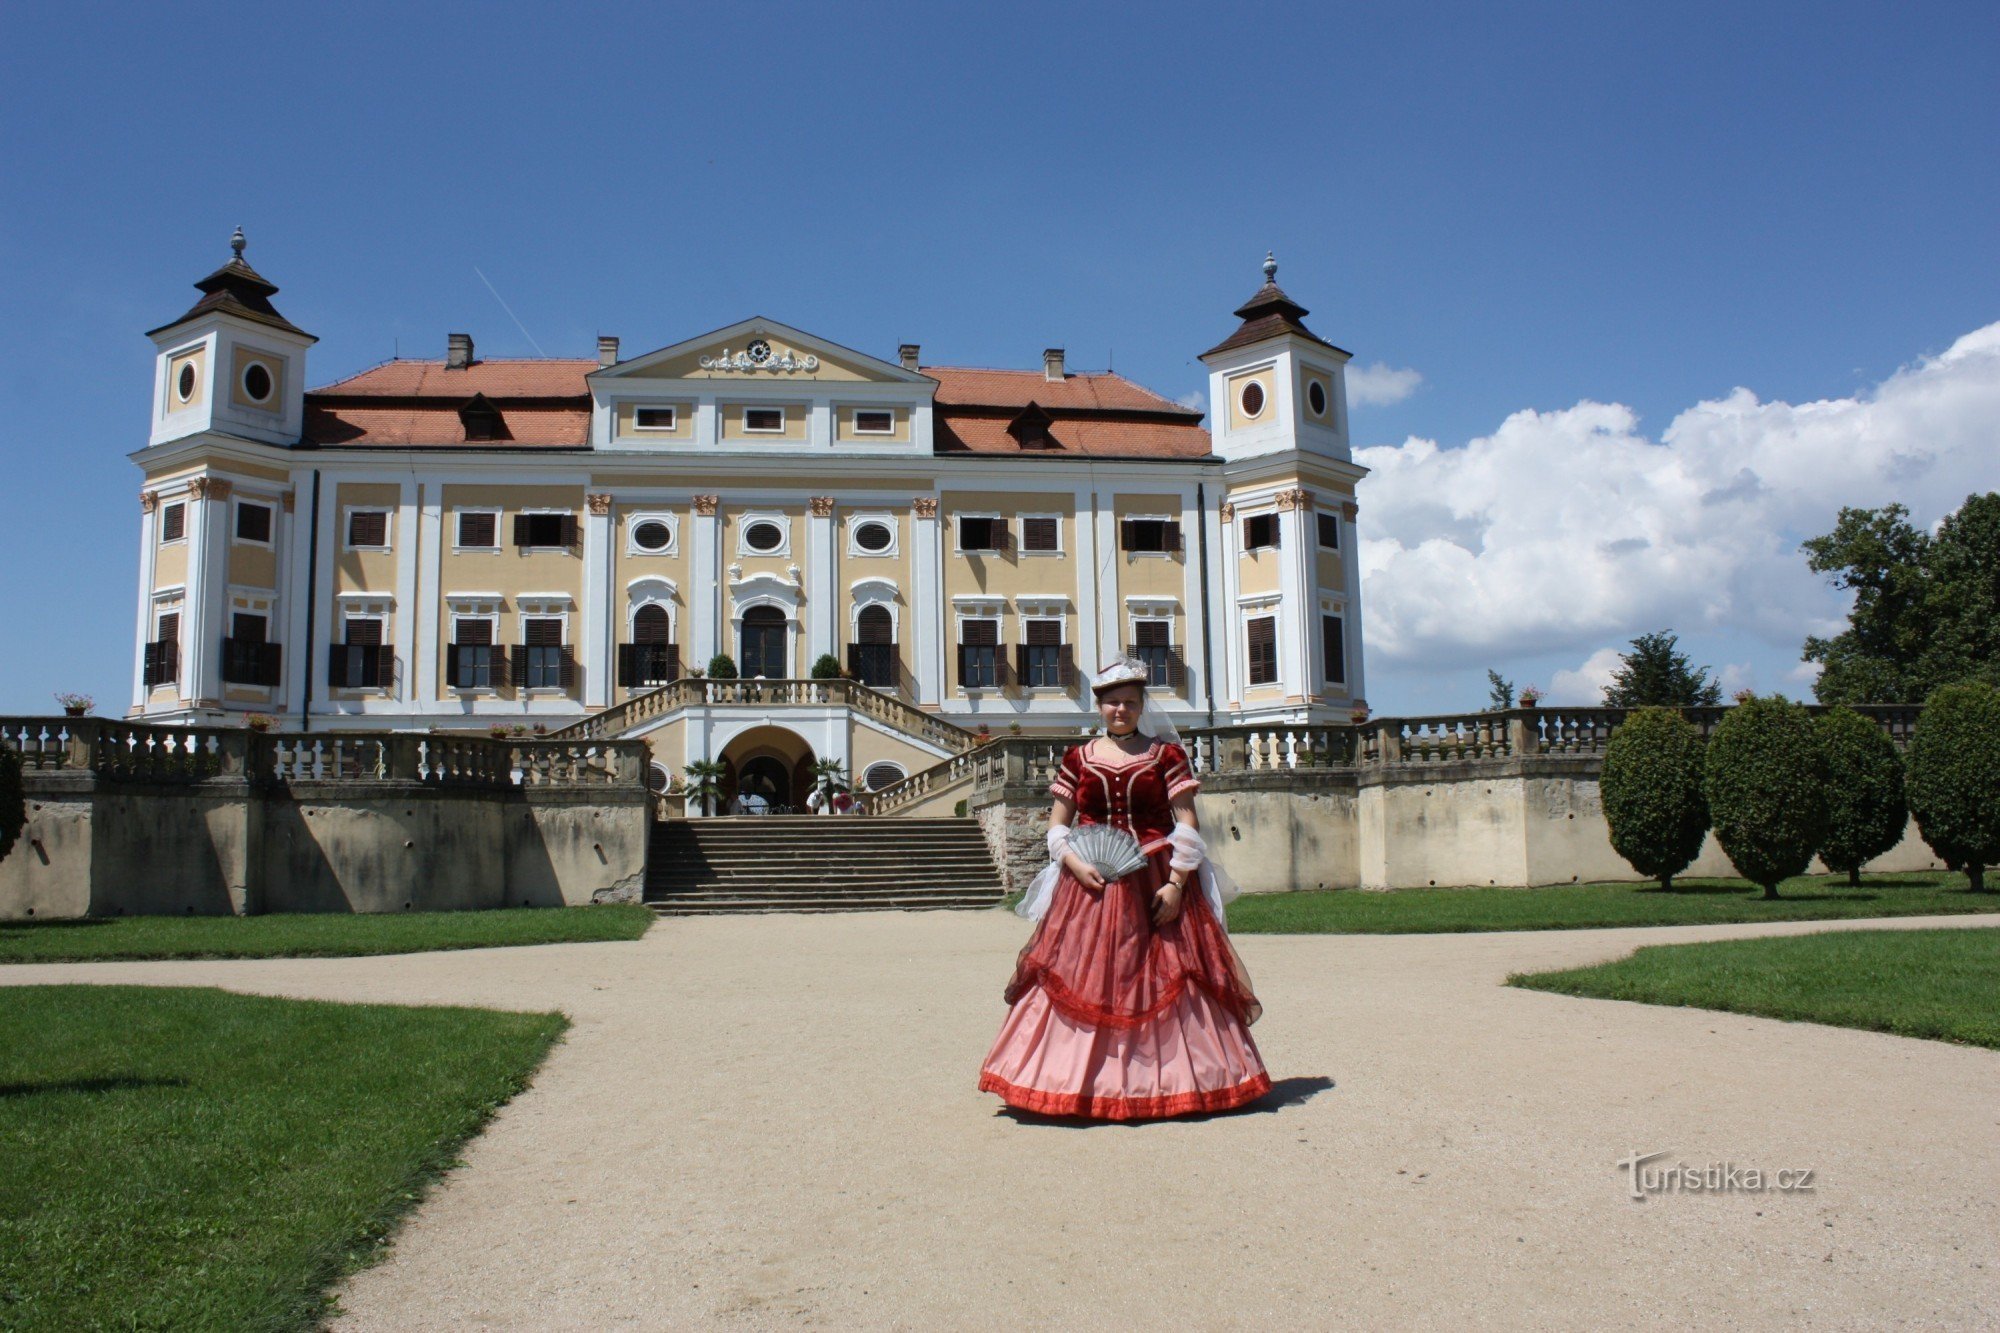 Romantični francuski park dvorca Milotice u blizini Kyjove